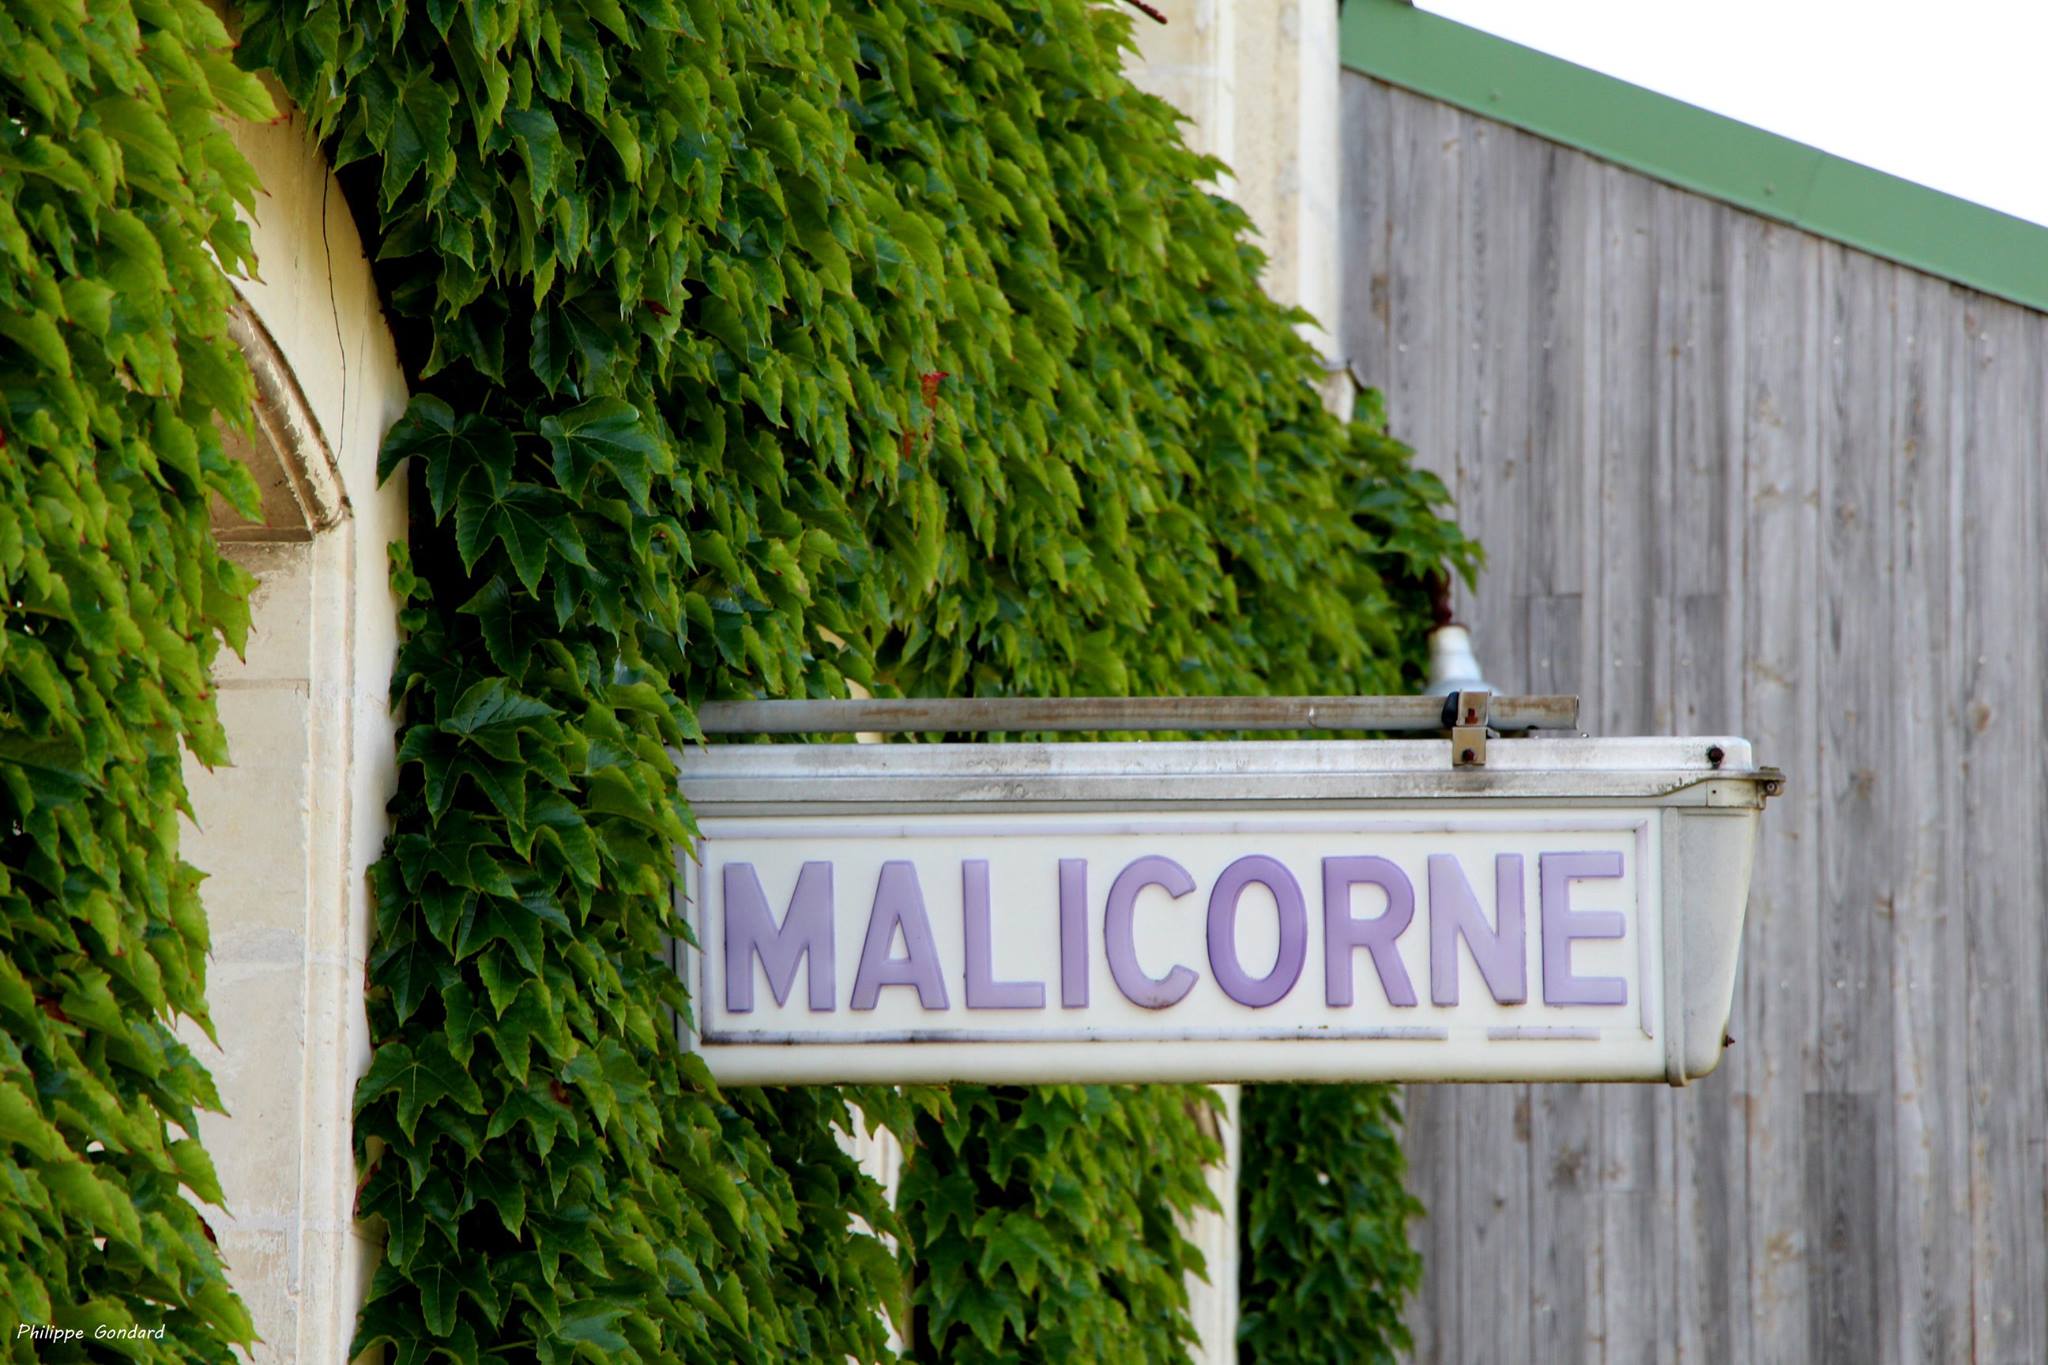 Malicorne sur Sarthe - L'ancien quai de la gare (Philippe Gondard)